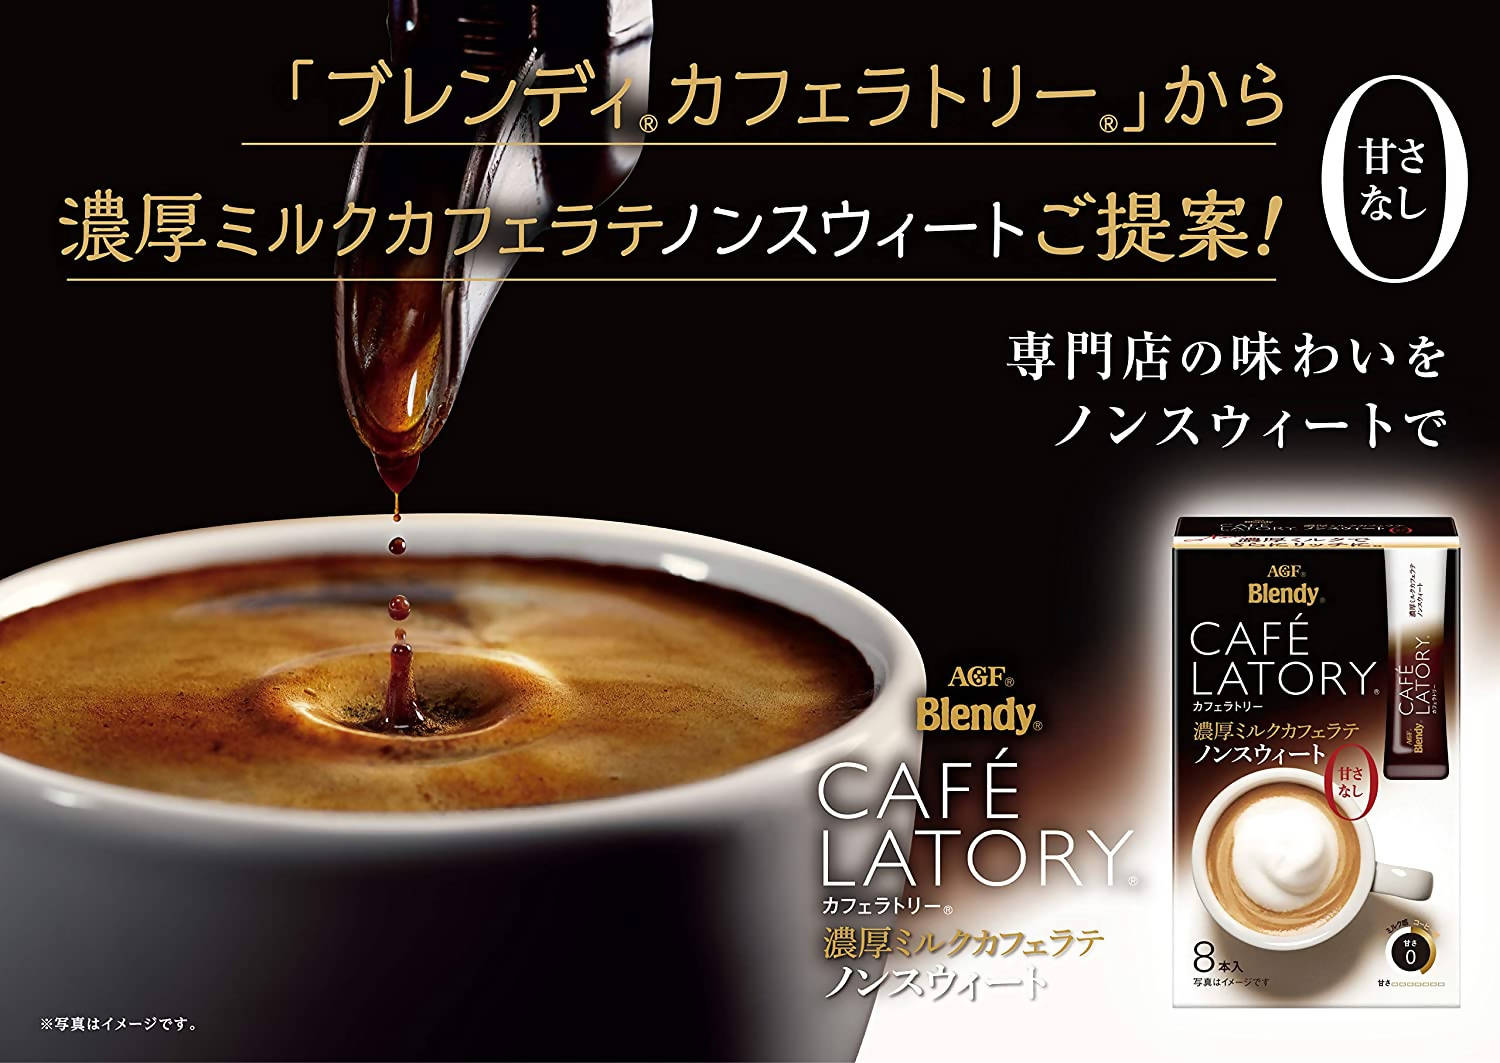 AGF Blendy Stick Café Latory Concentrated Milk Cafe Latte – No Sweetne –  Allegro Japan